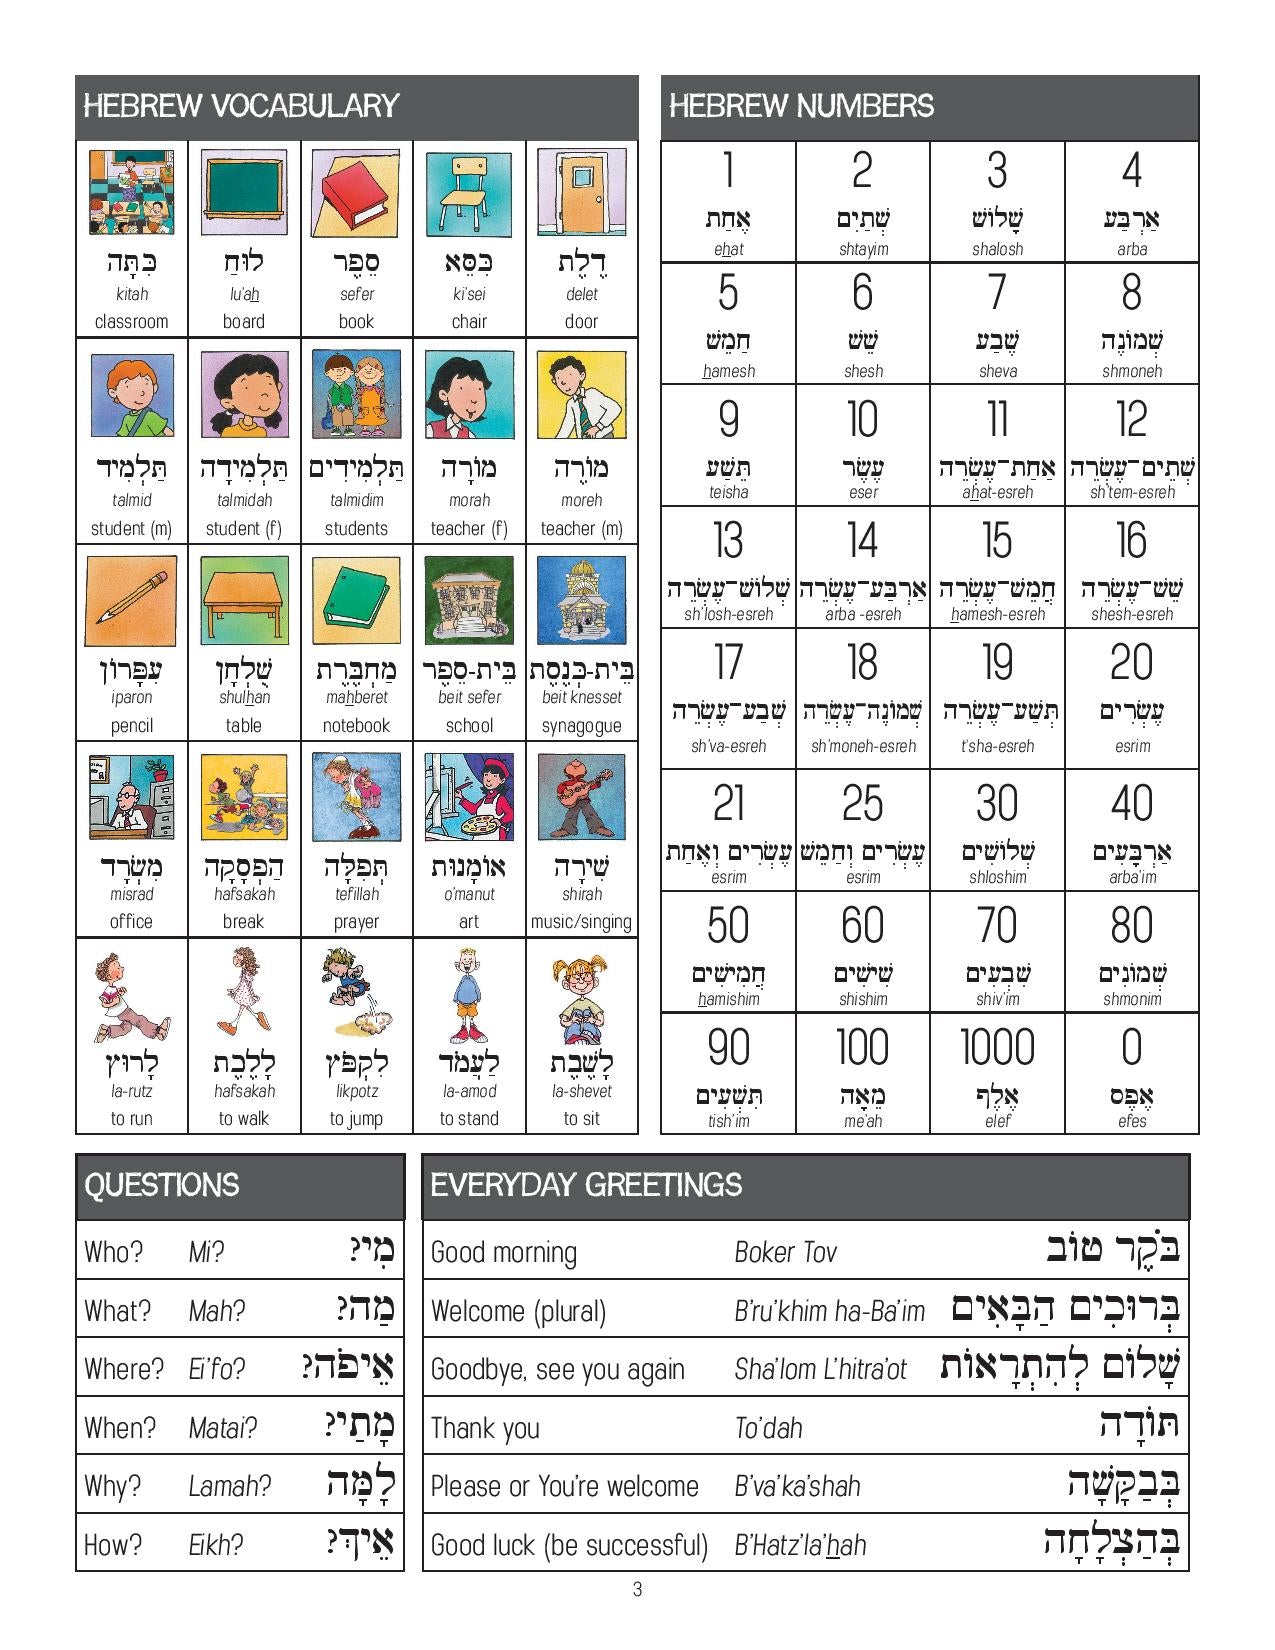 Torah Aura 5799 Jewish Classroom Planner